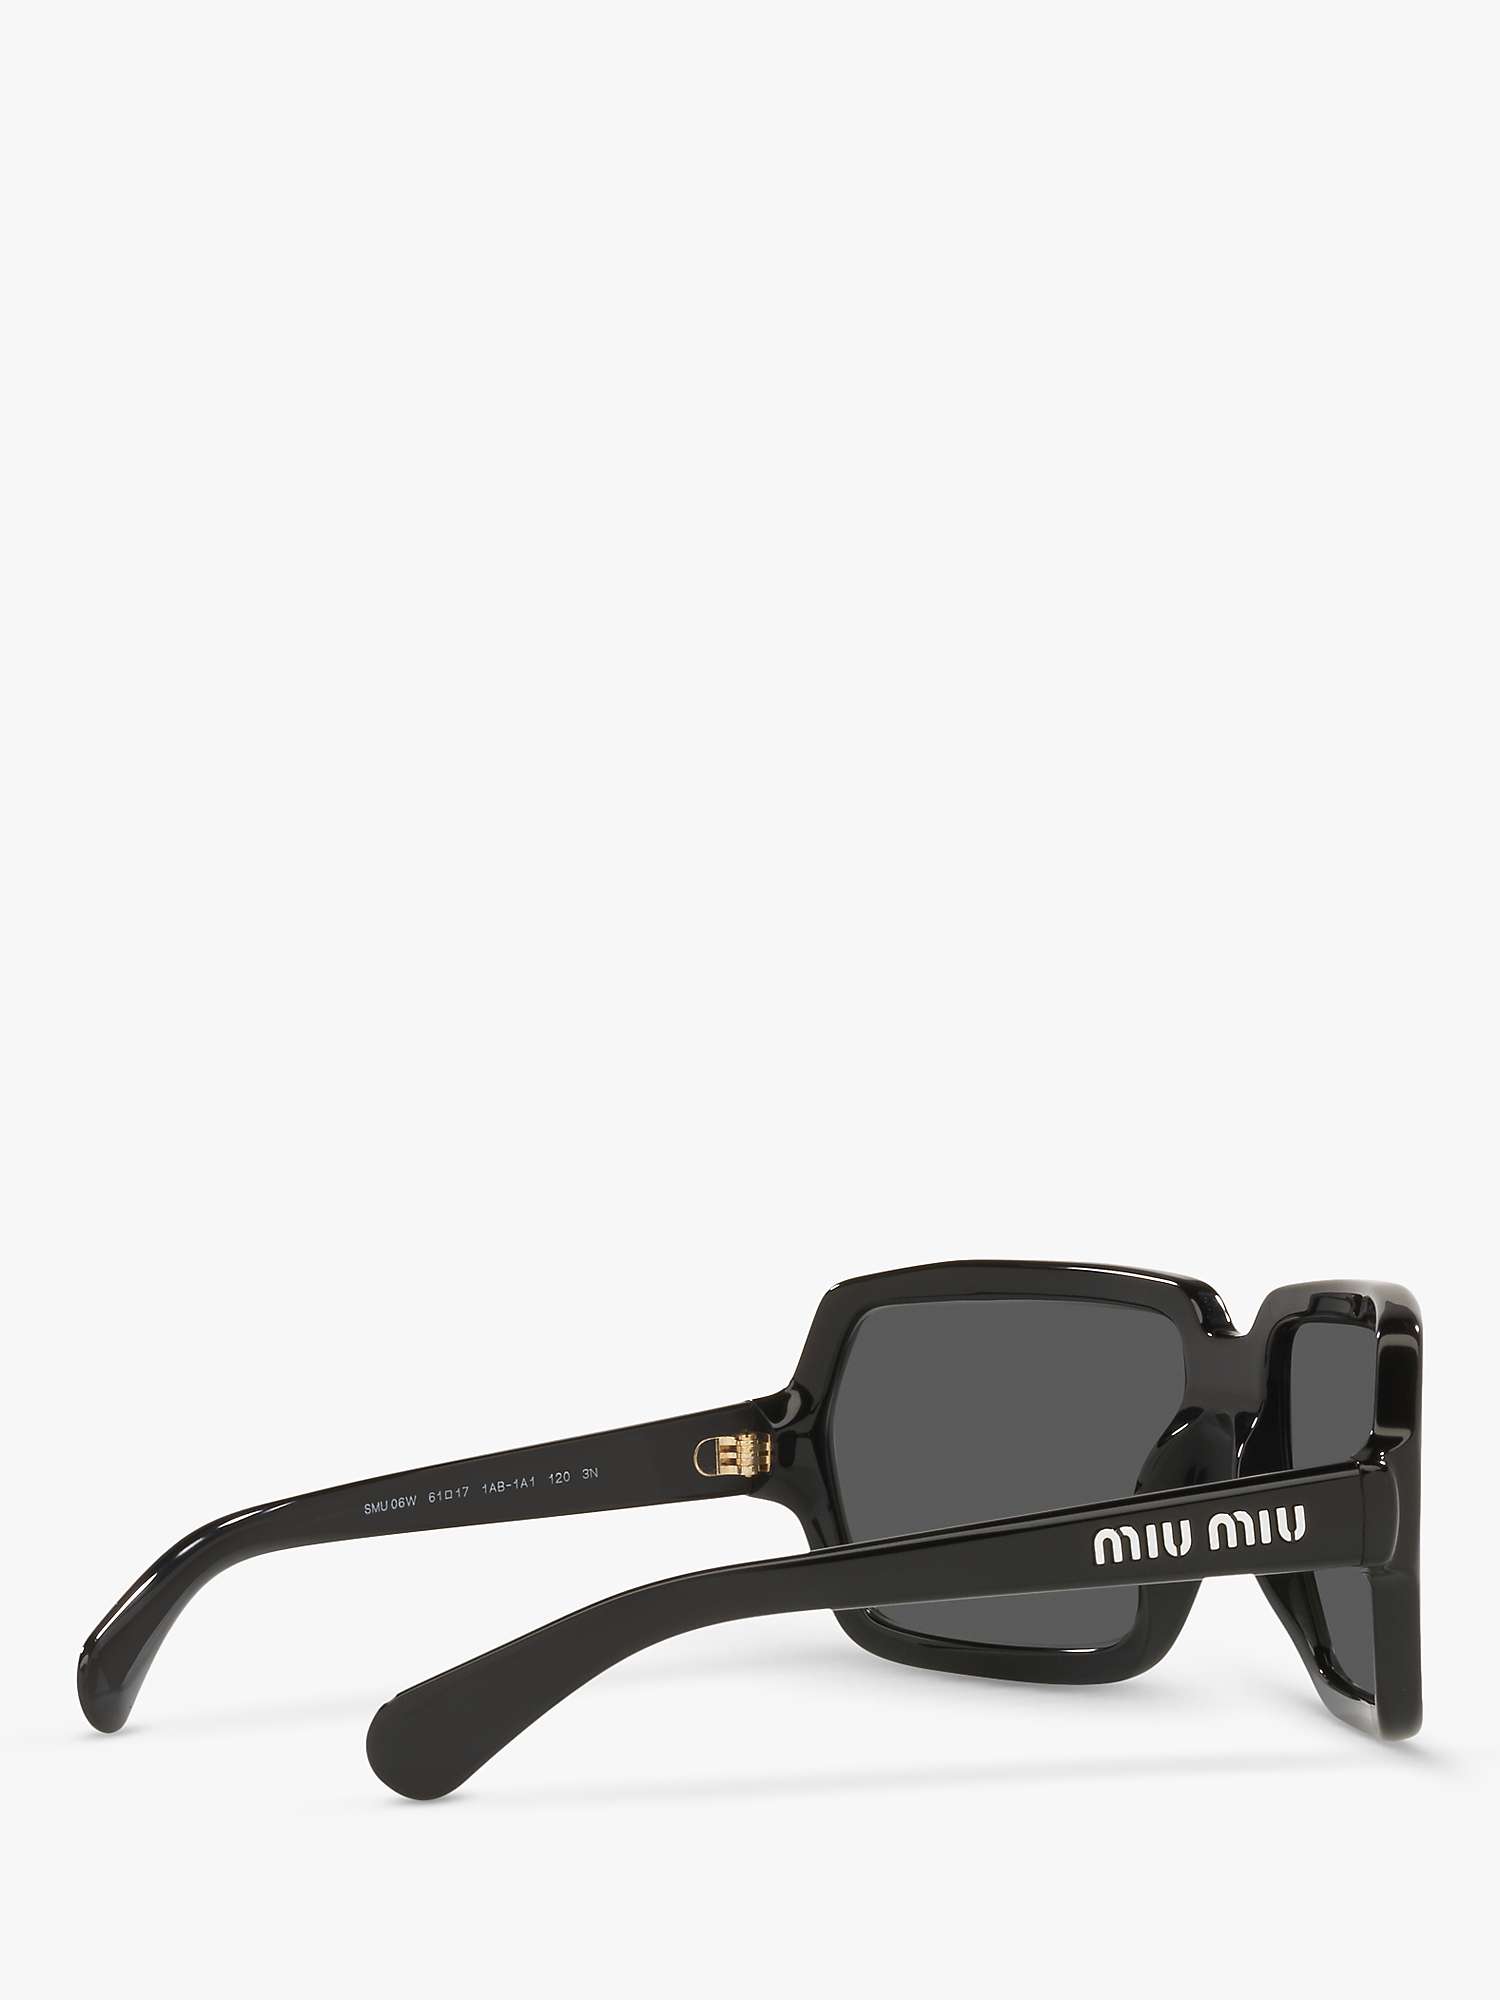 Buy Miu Miu MU 06WS Women's Irregular Sunglasses, Black/Grey Online at johnlewis.com